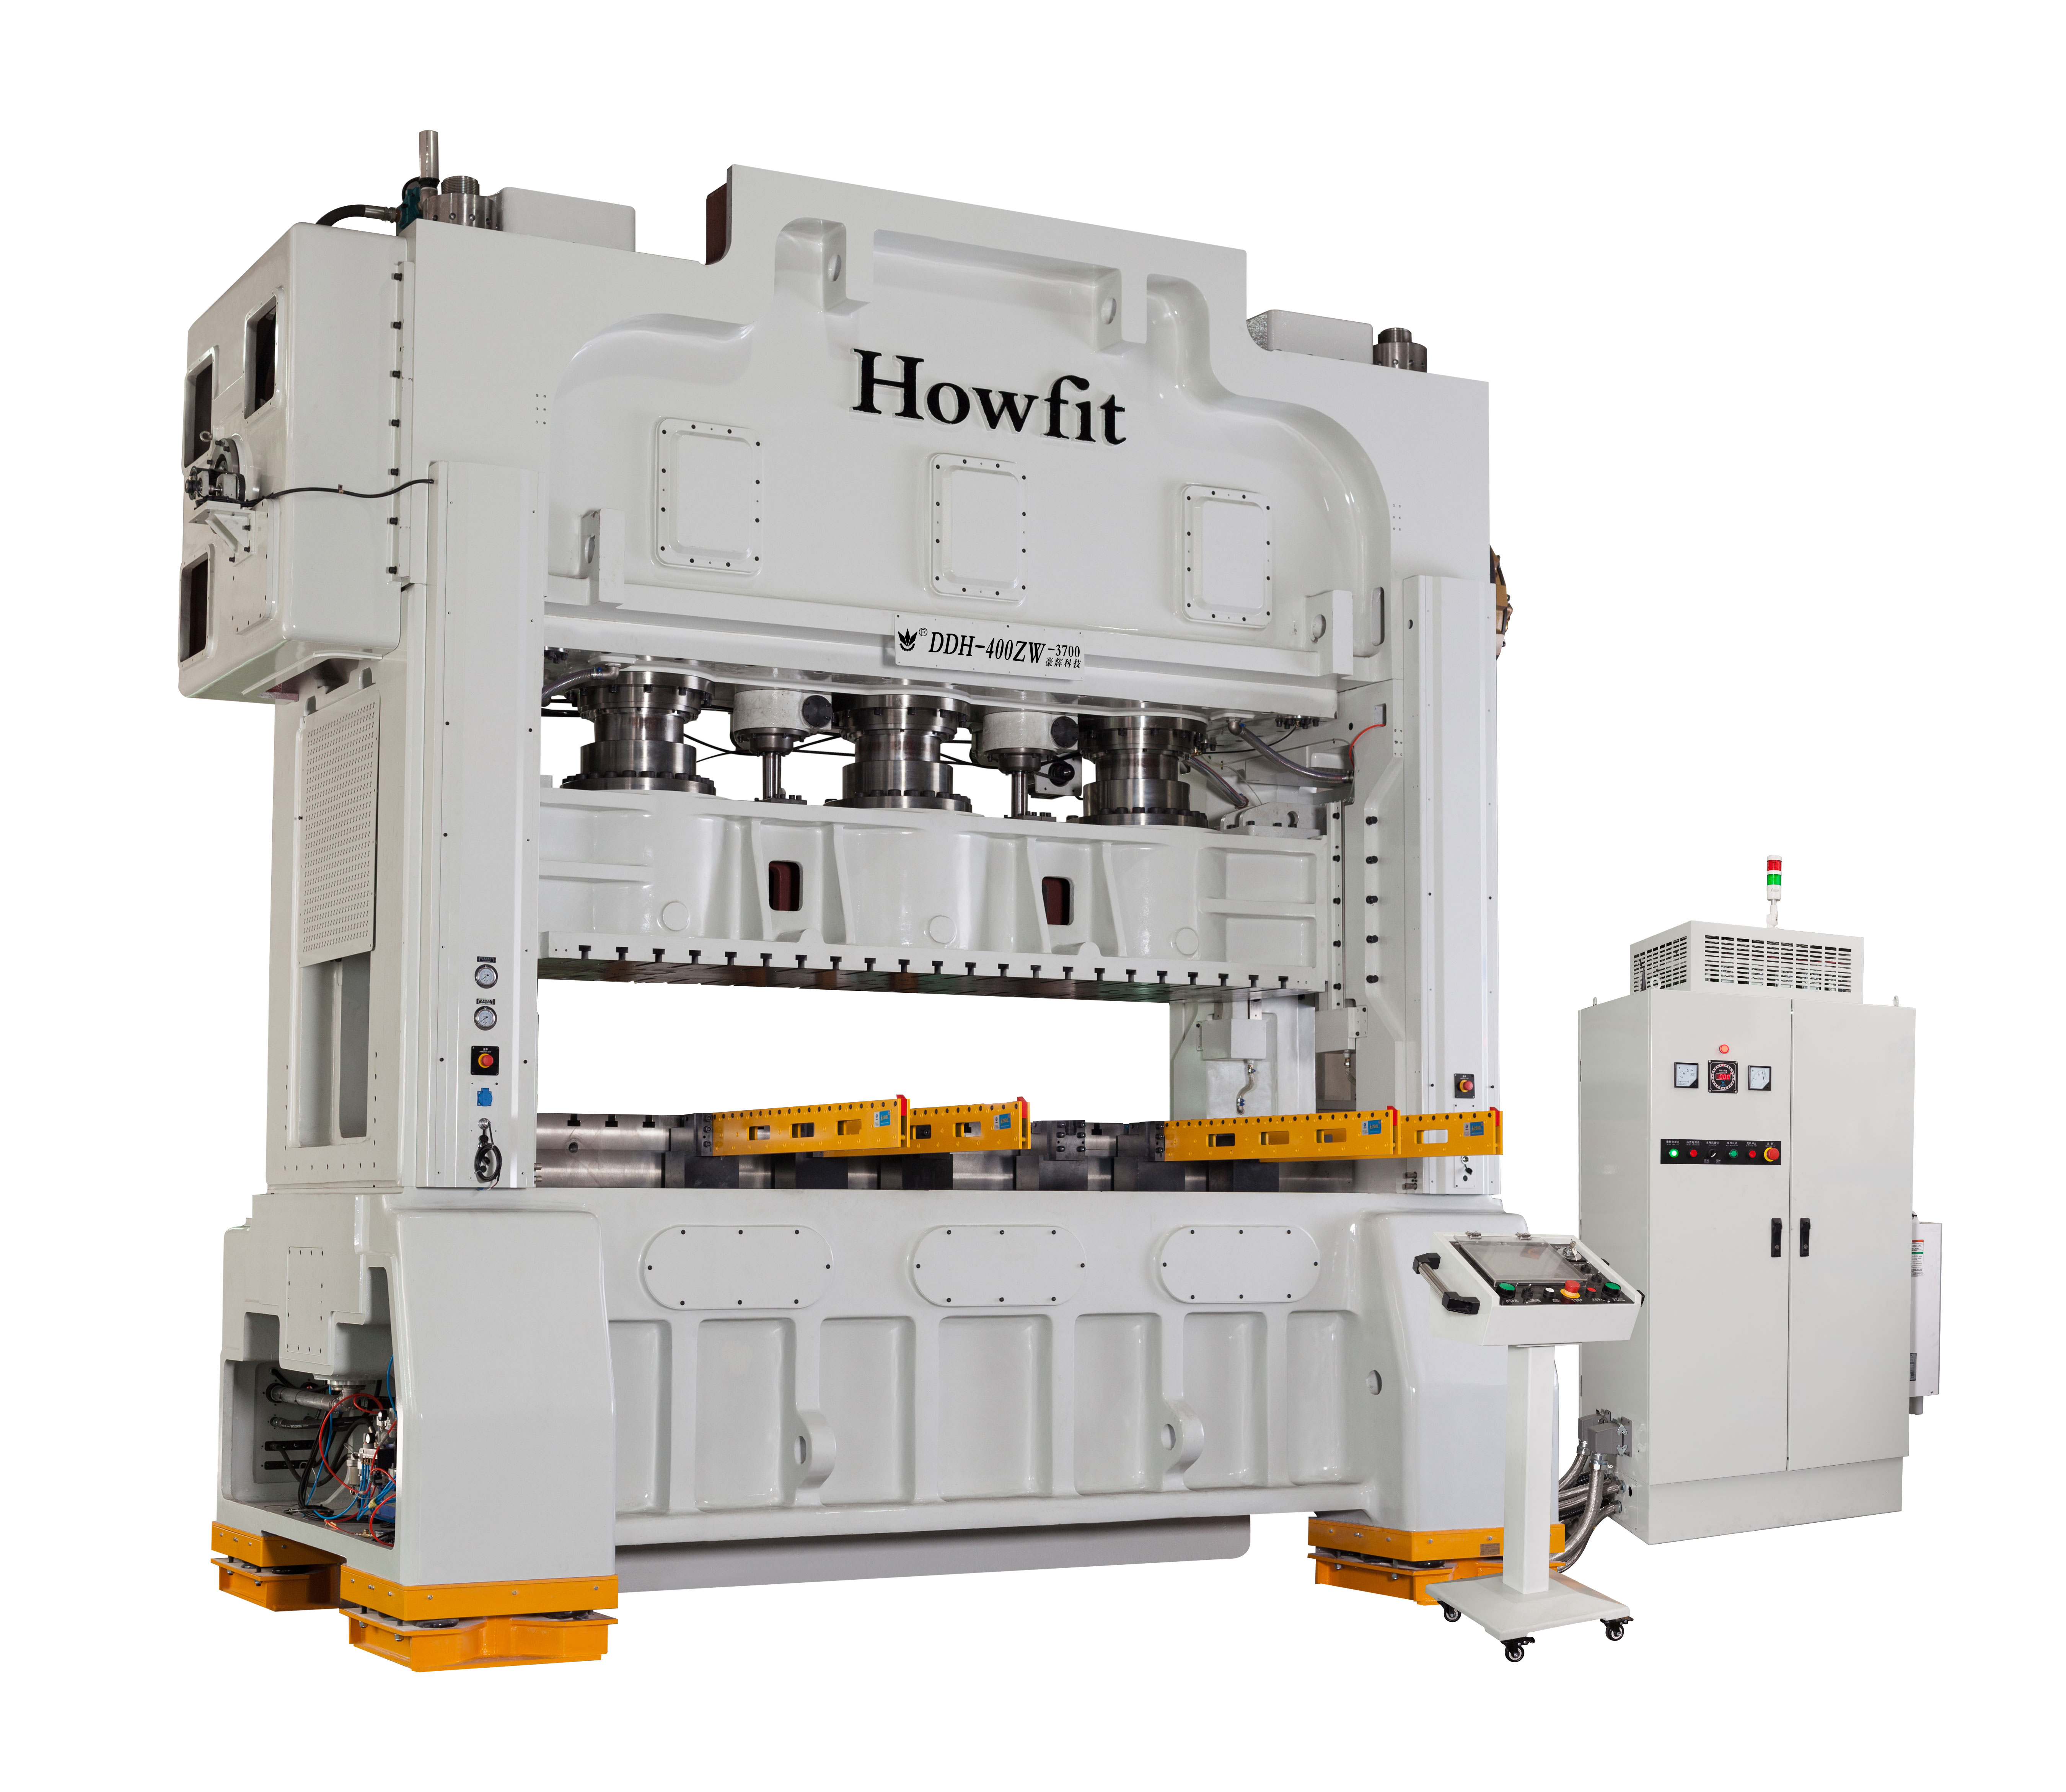 HOWFIT DDH 400T ZW-3700 jamči kvalitetu proizvodnje